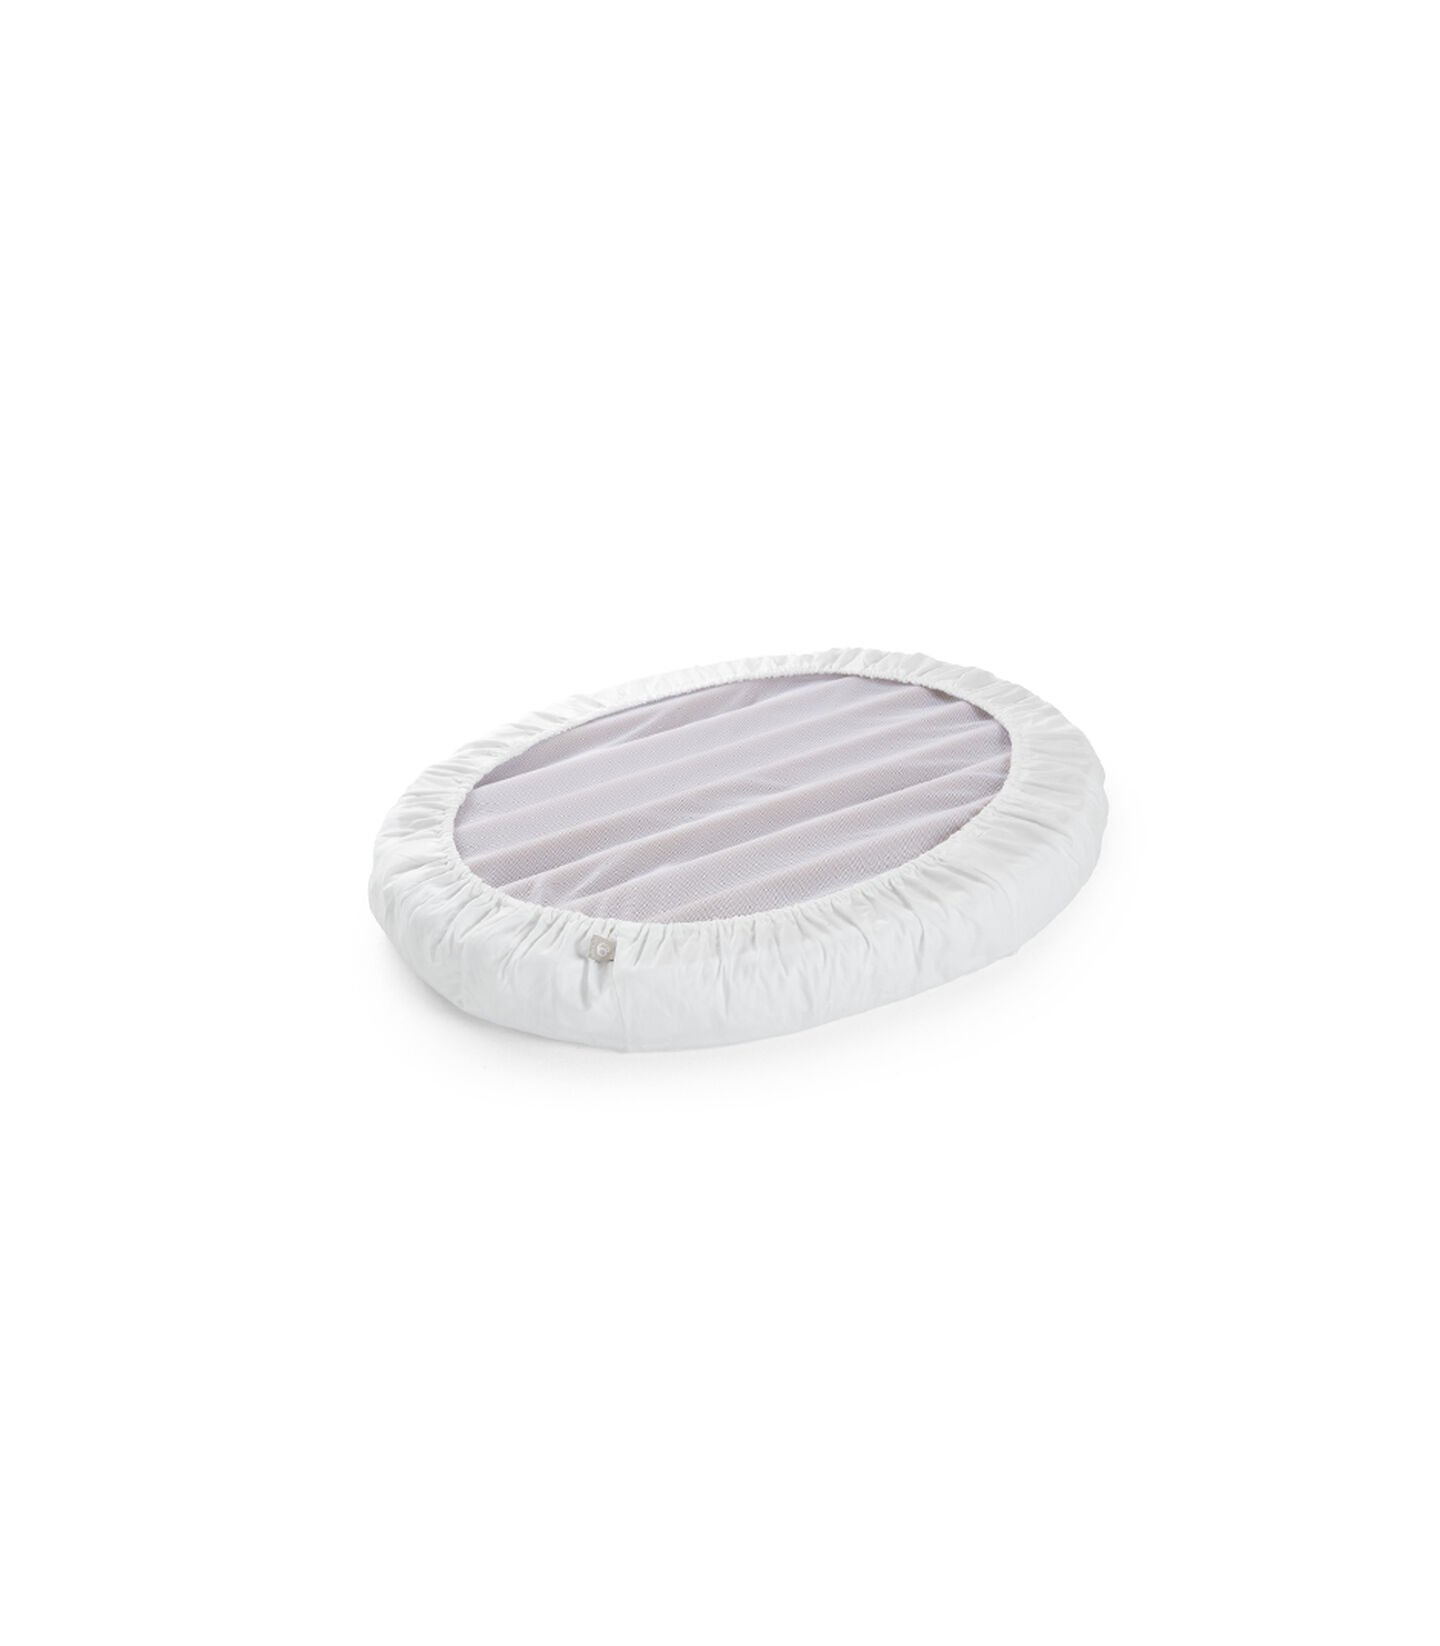 Stokke® Sleepi™ Mini Sáb. Bajera ajustable Blanco, Blanco, mainview view 2